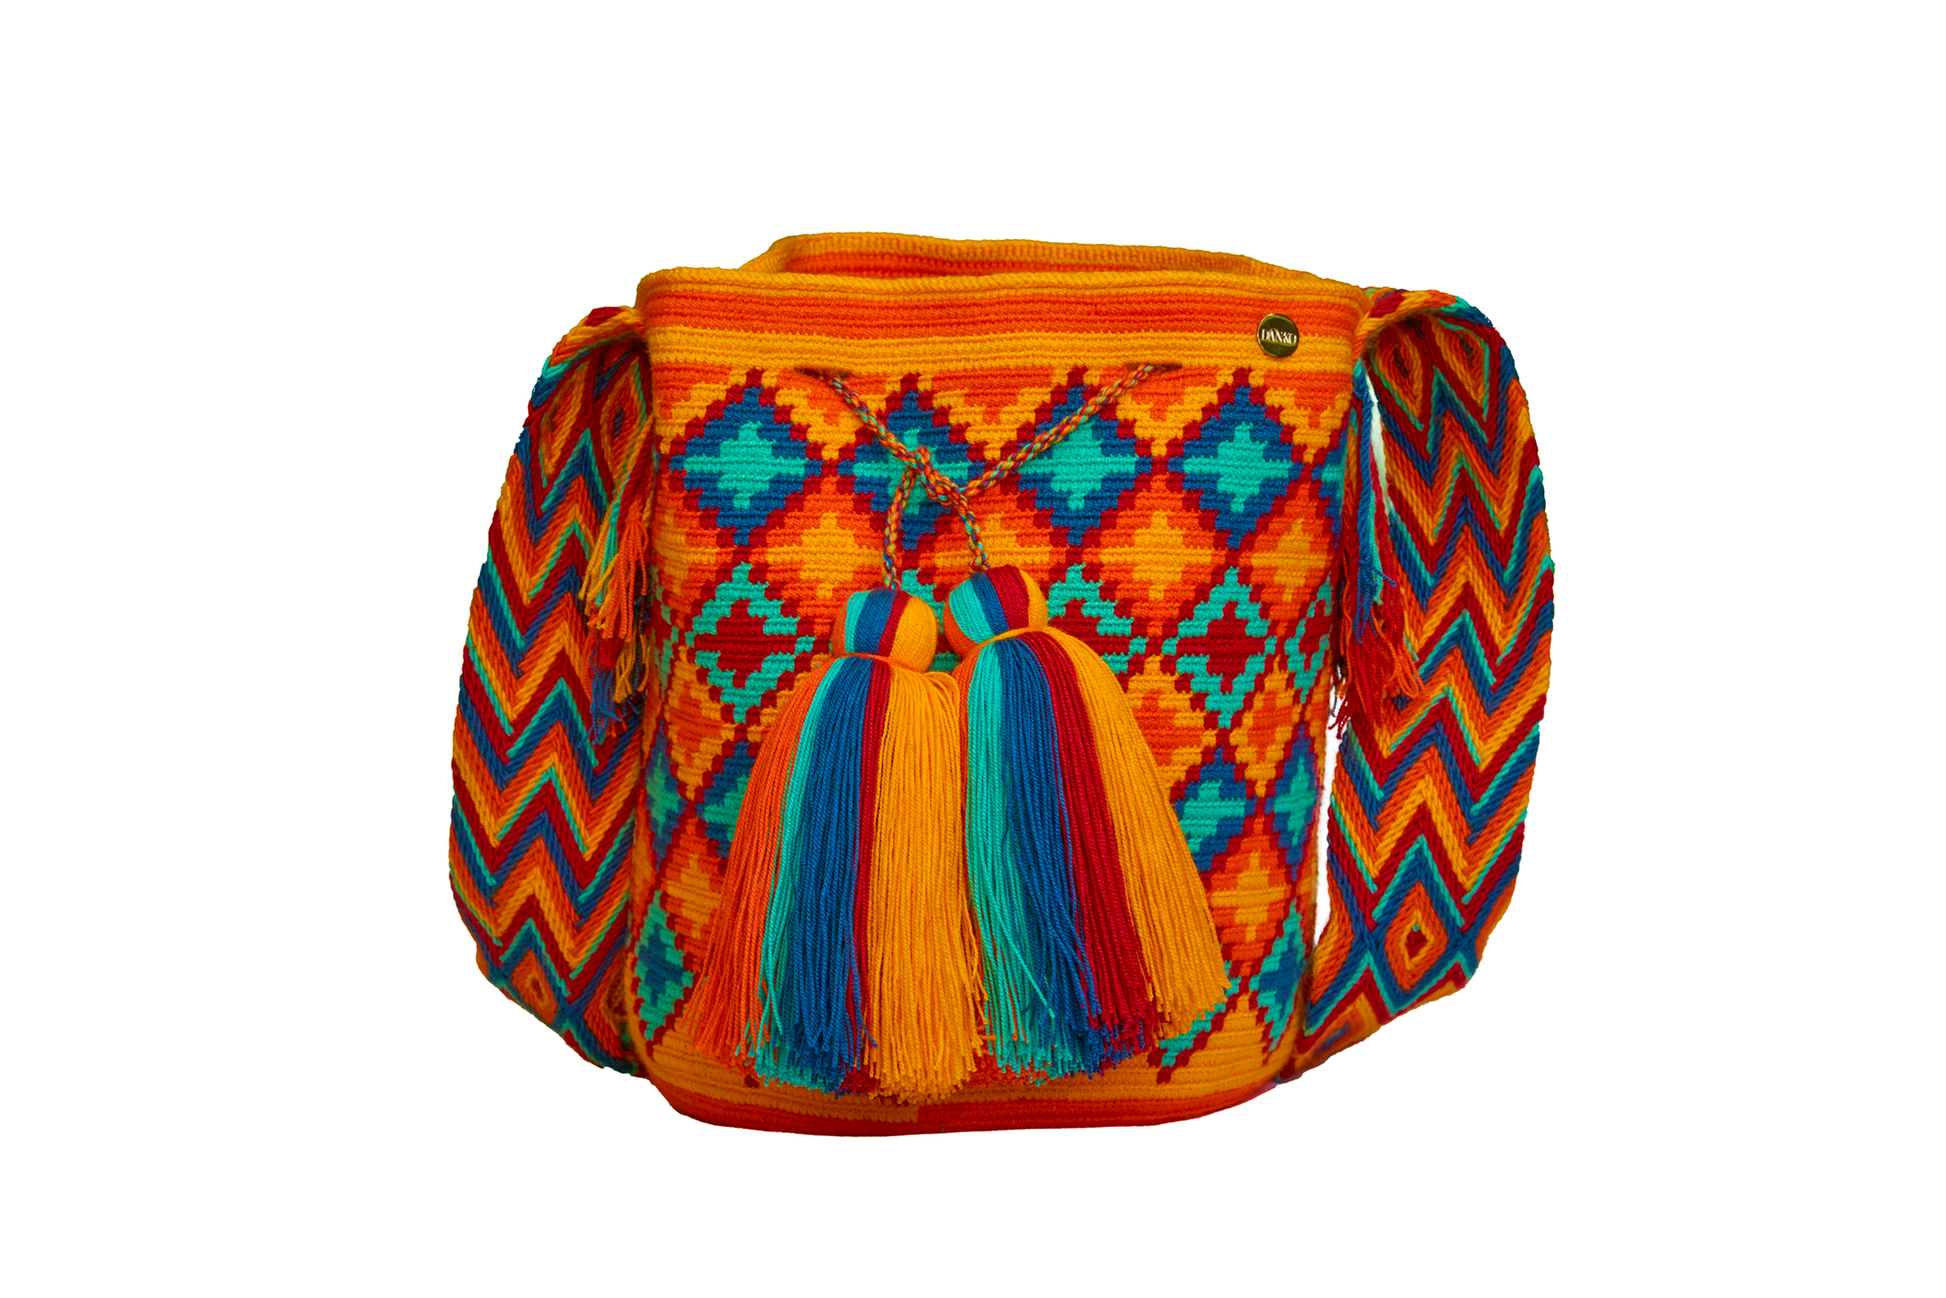 Orange Patterned Crochet Bag, the handbag also has 2 tassels.